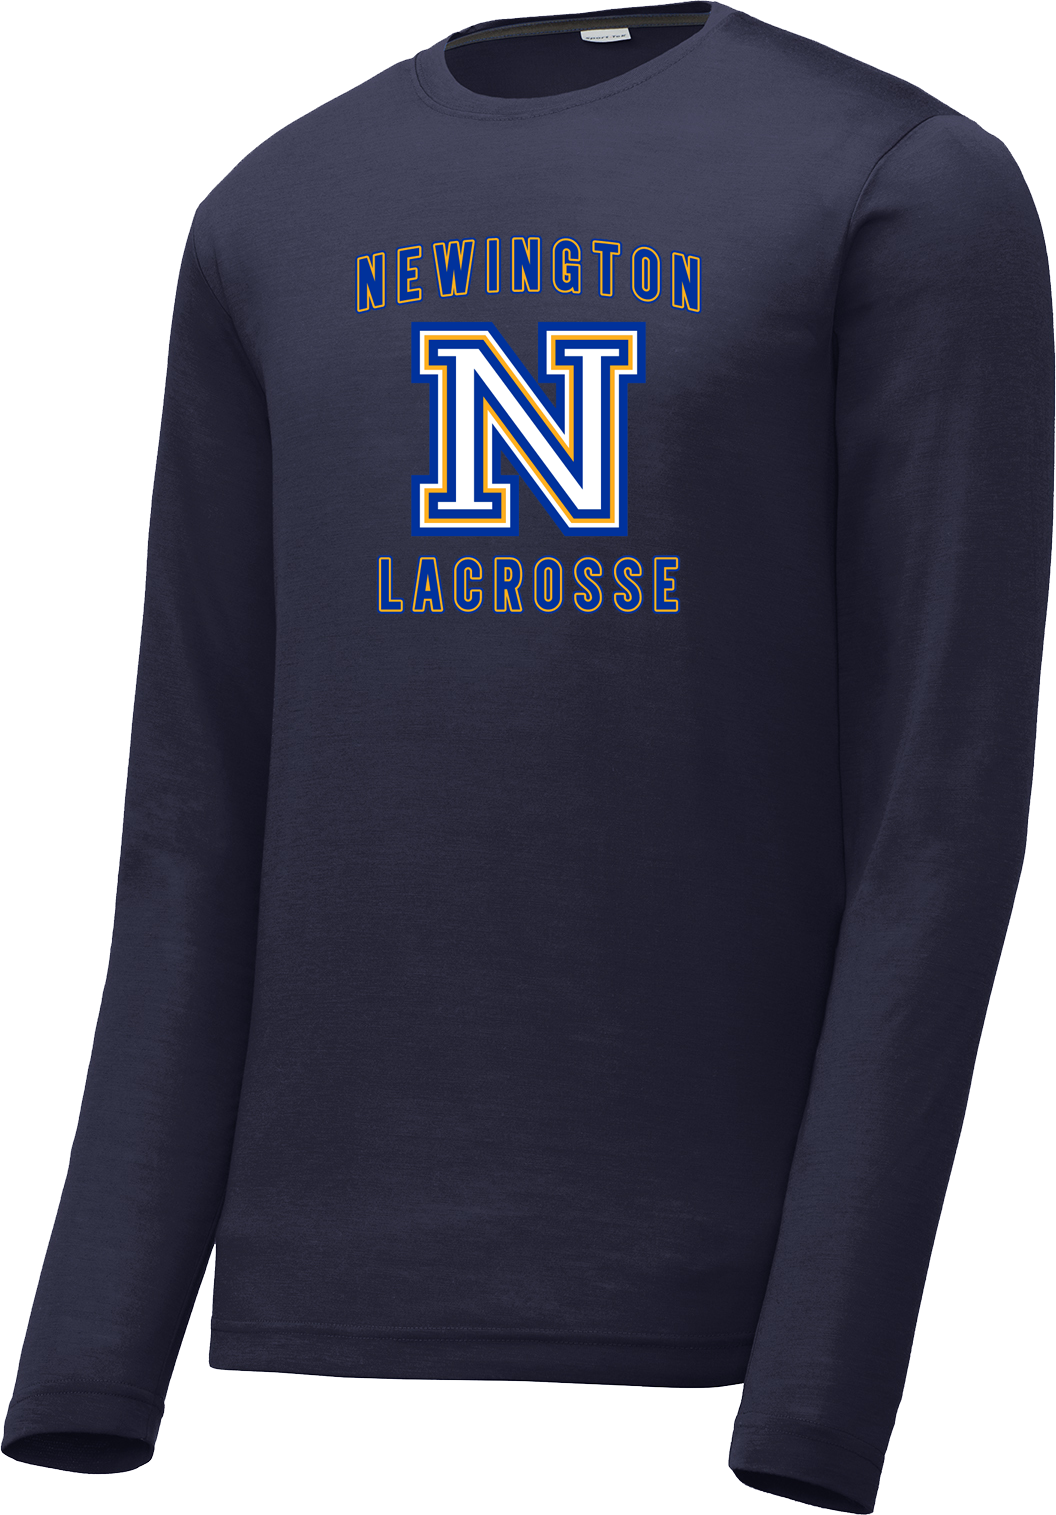 Newington Lacrosse Navy Long Sleeve CottonTouch Performance Shirt